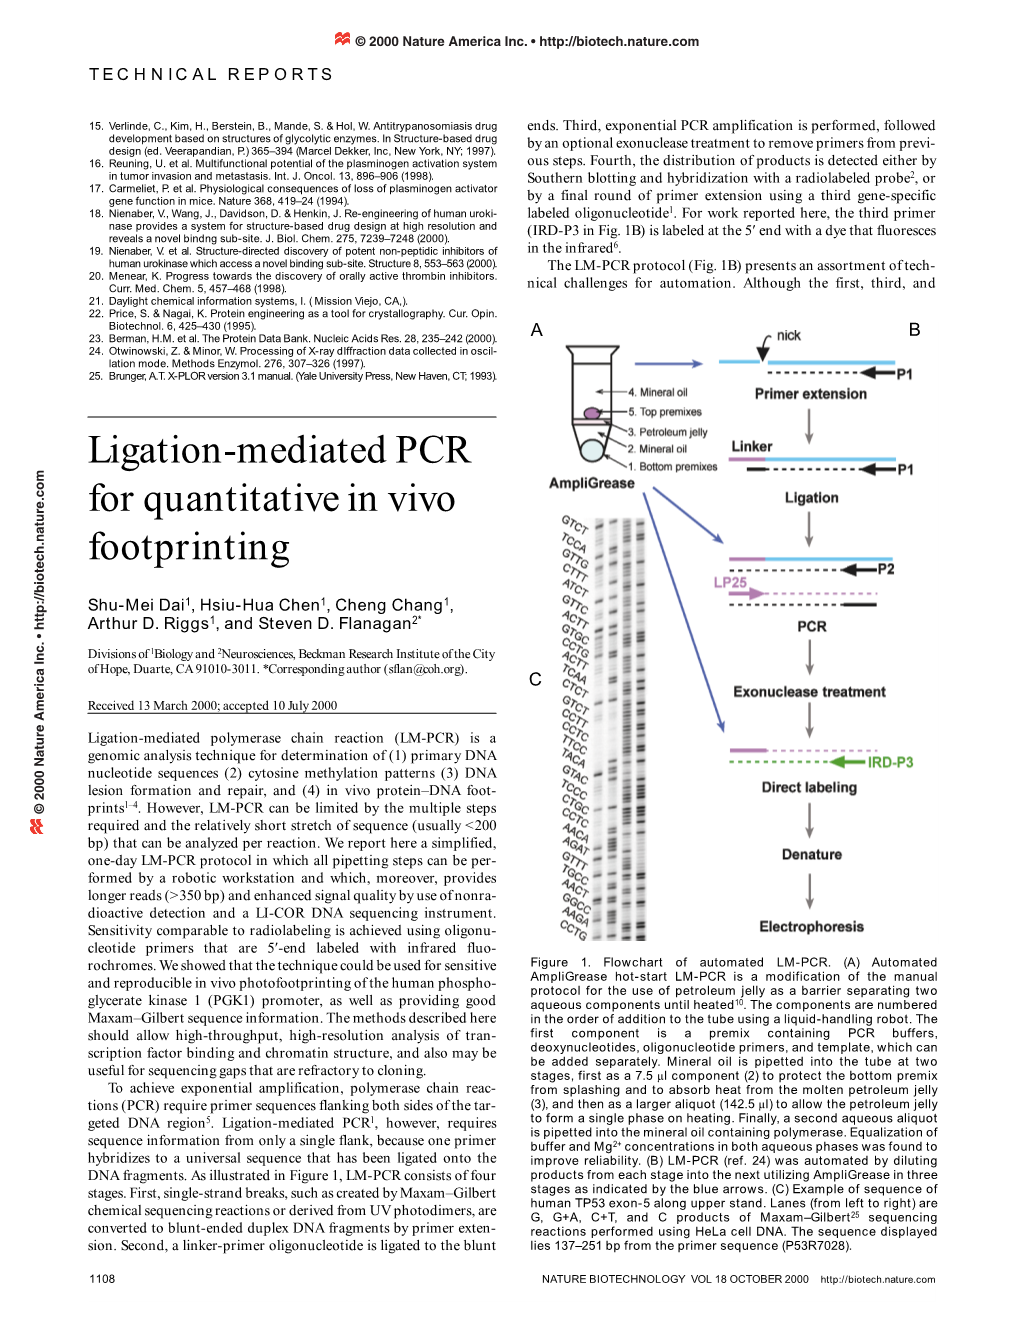 Ligation-Mediated PCR for Quantitative in Vivo Footprinting